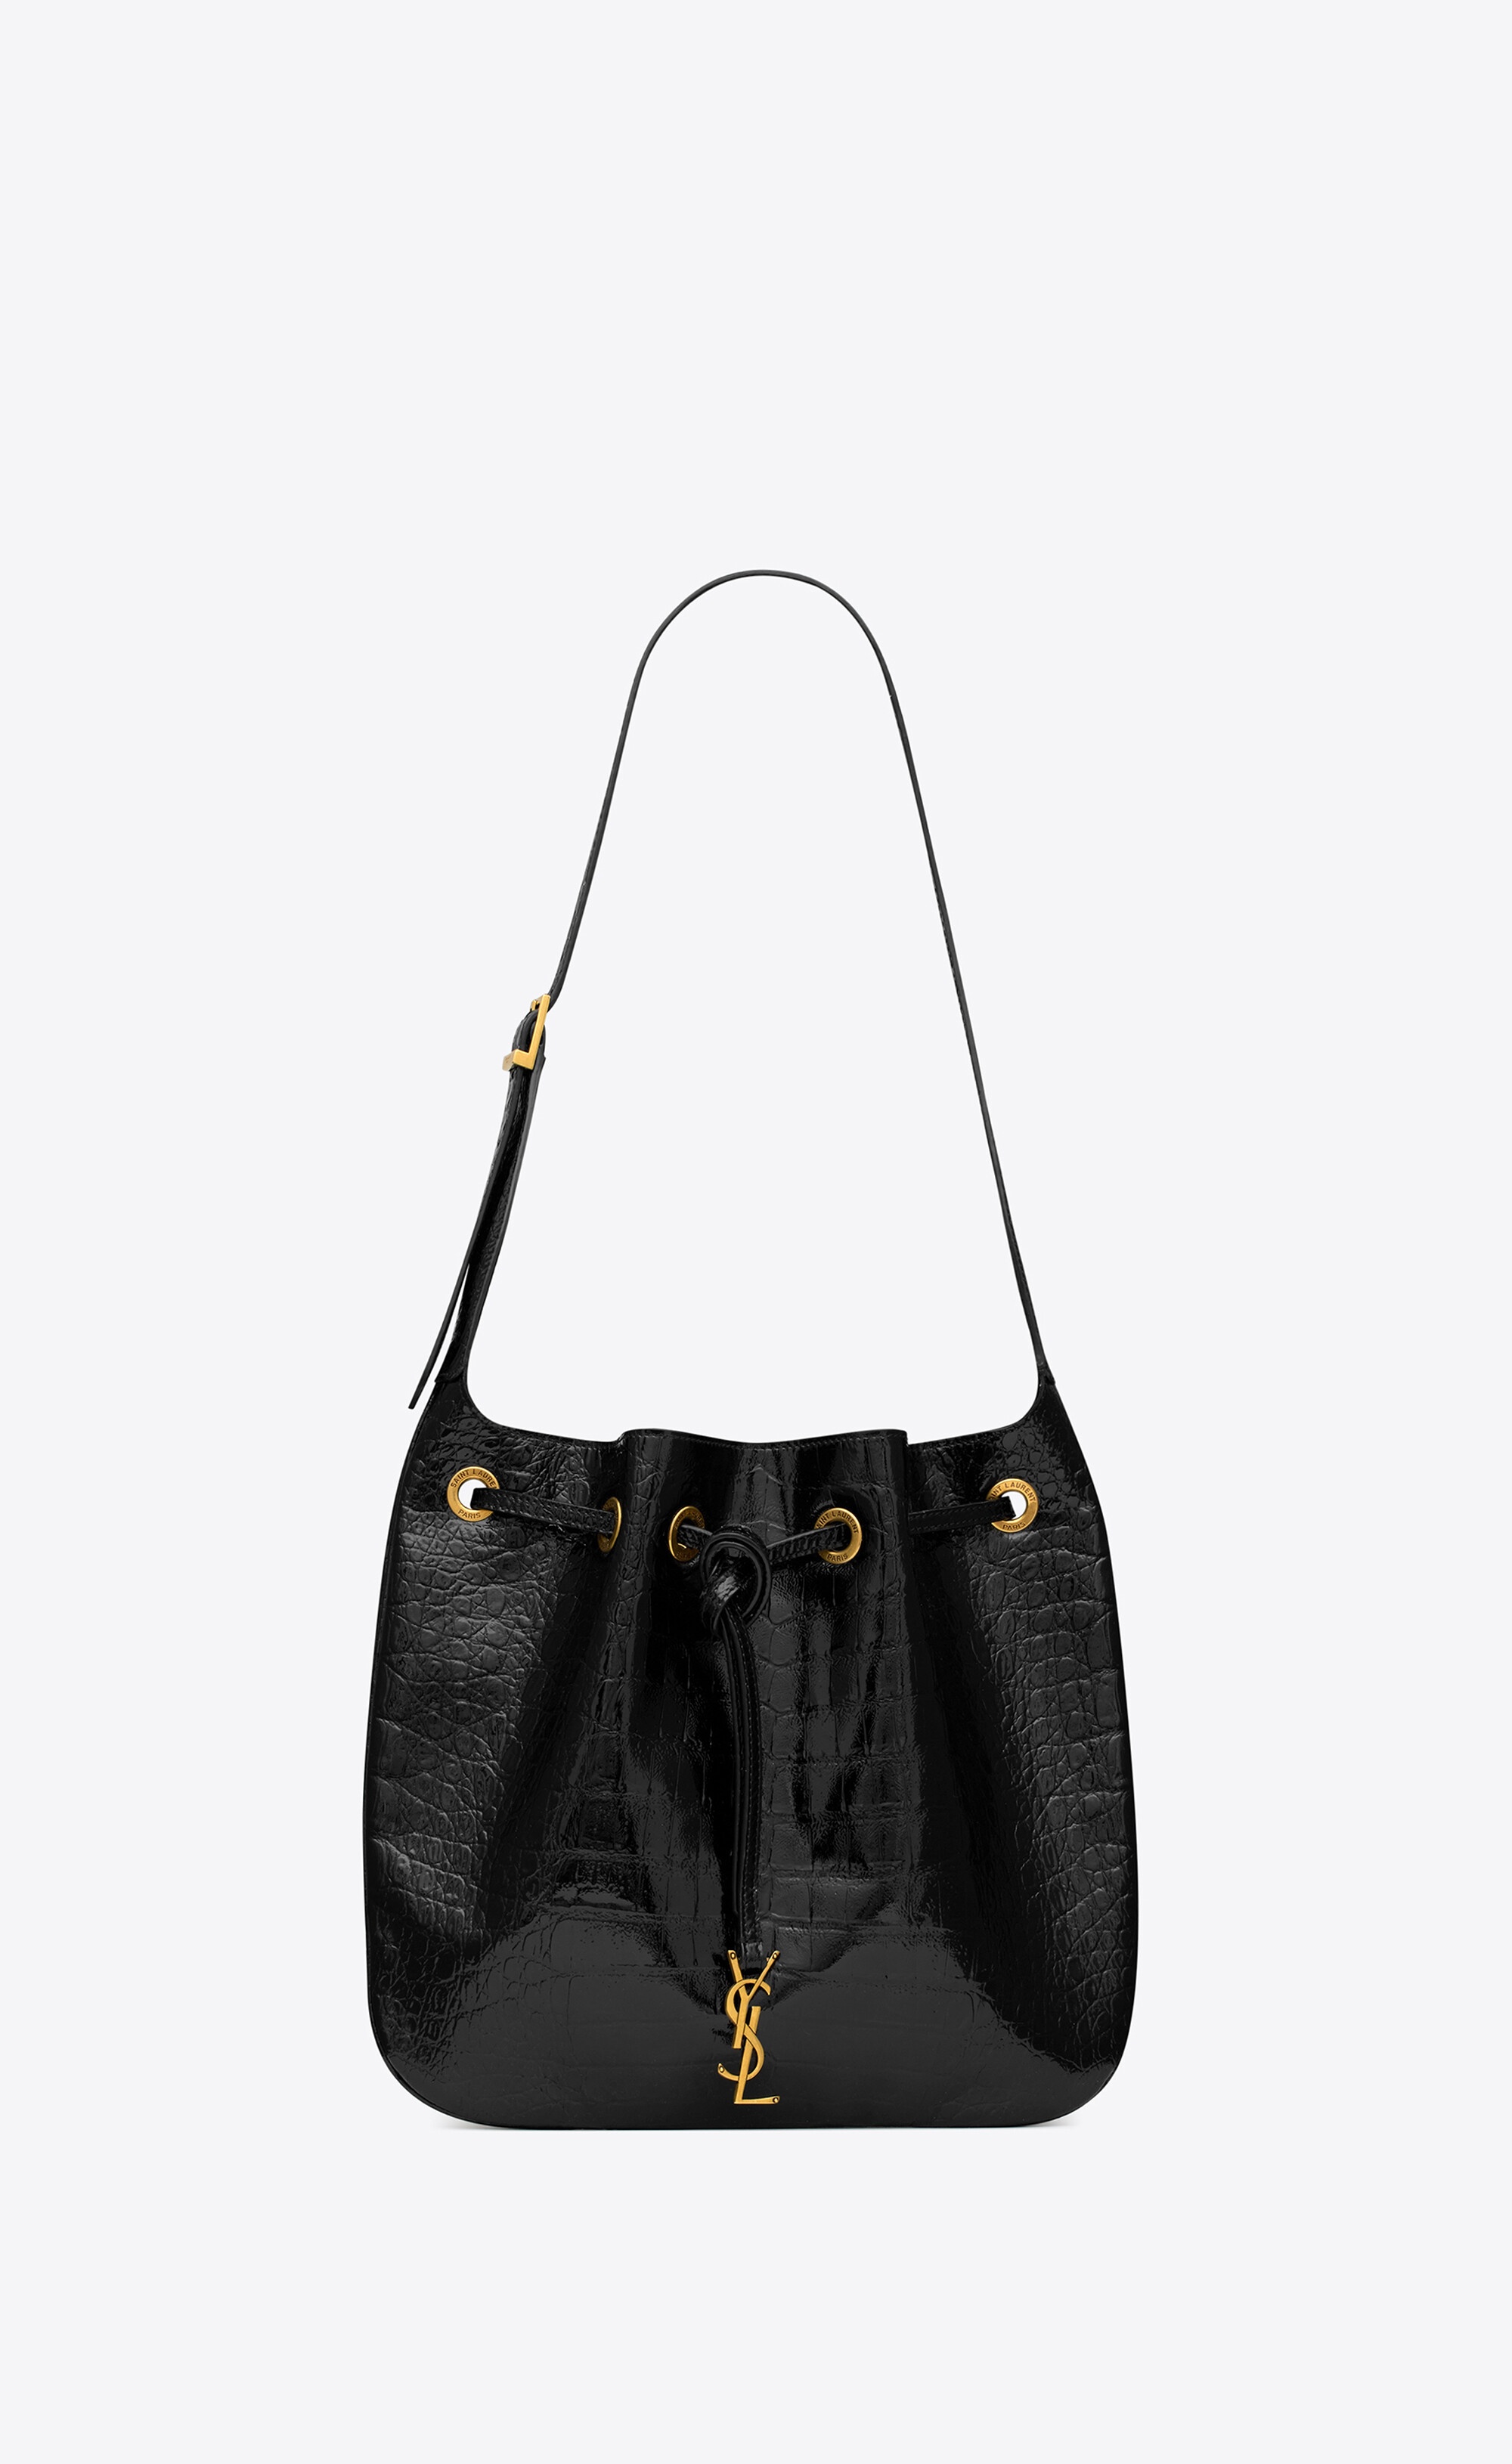 paris vii medium hobo bag in crocodile-embossed patent leather - 1